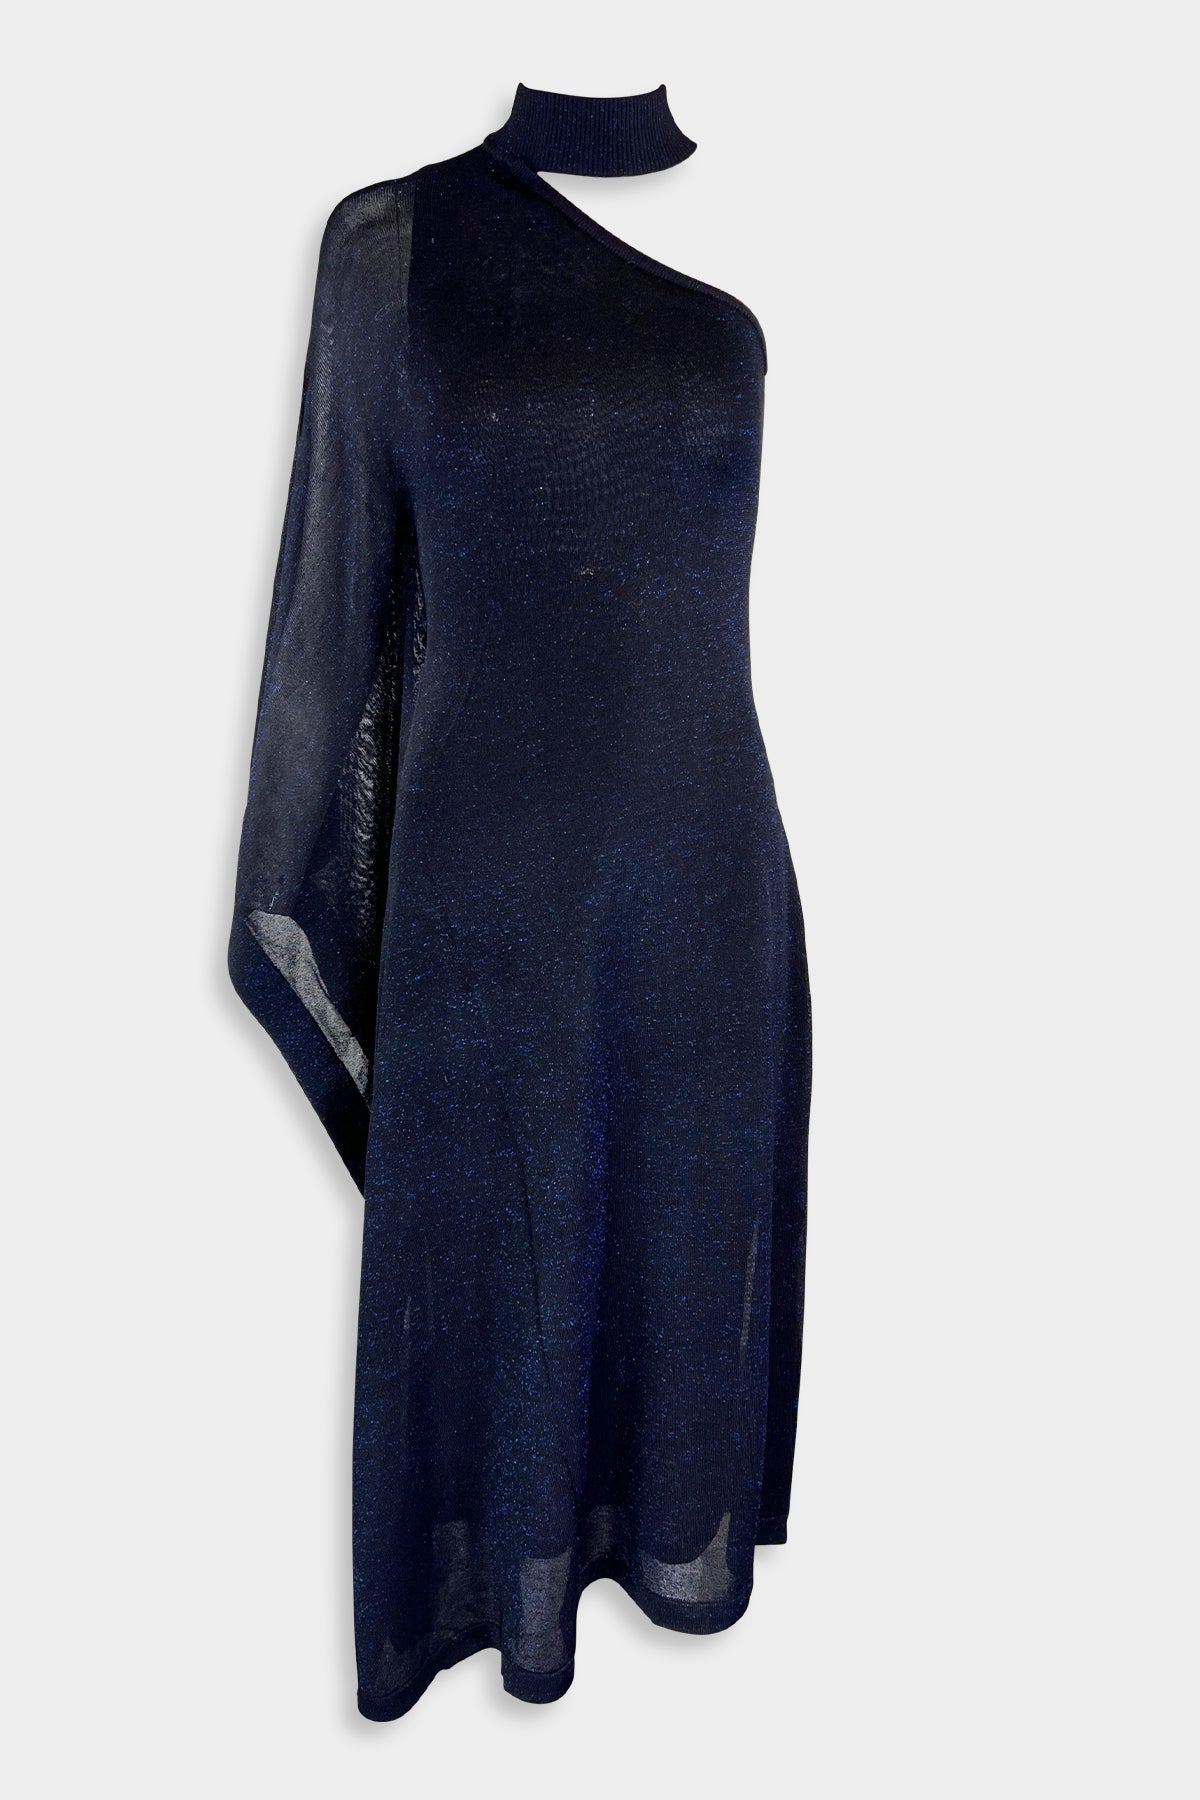 Nami Knit Dress in Midnight Black - shop-olivia.com